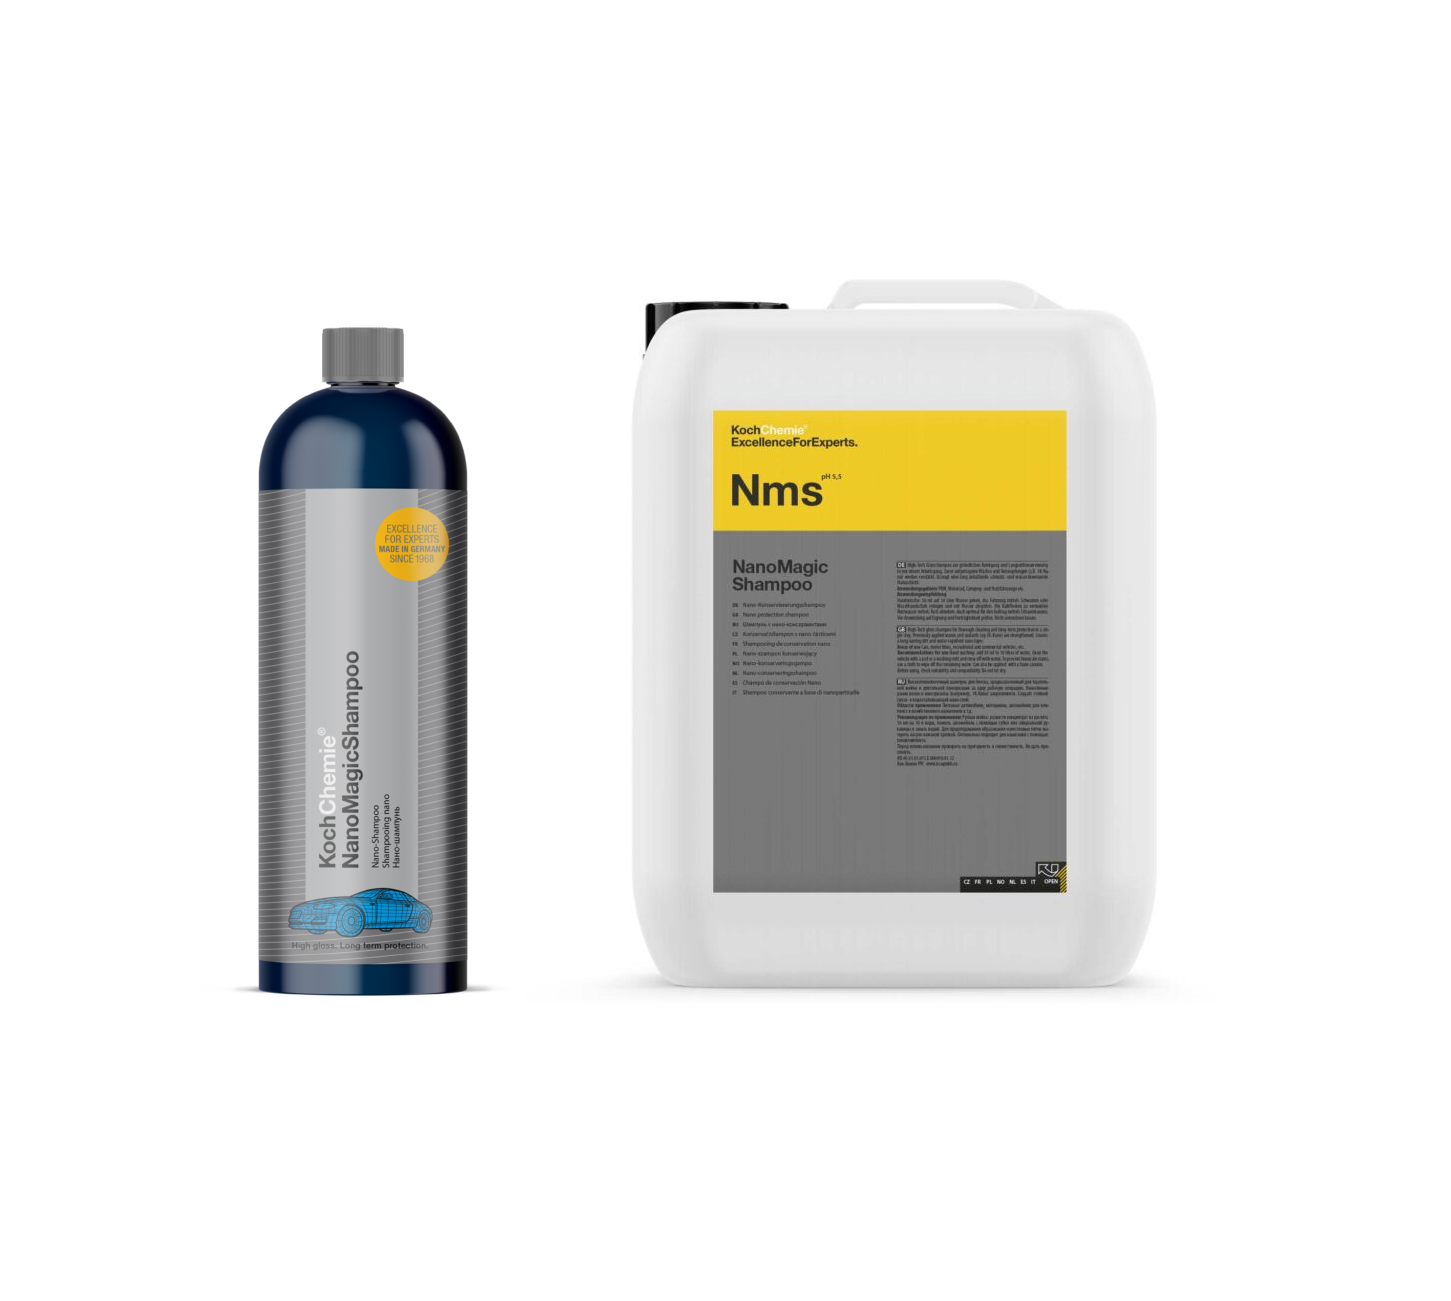 Reset pH-neutrales Autoshampoo 500ml